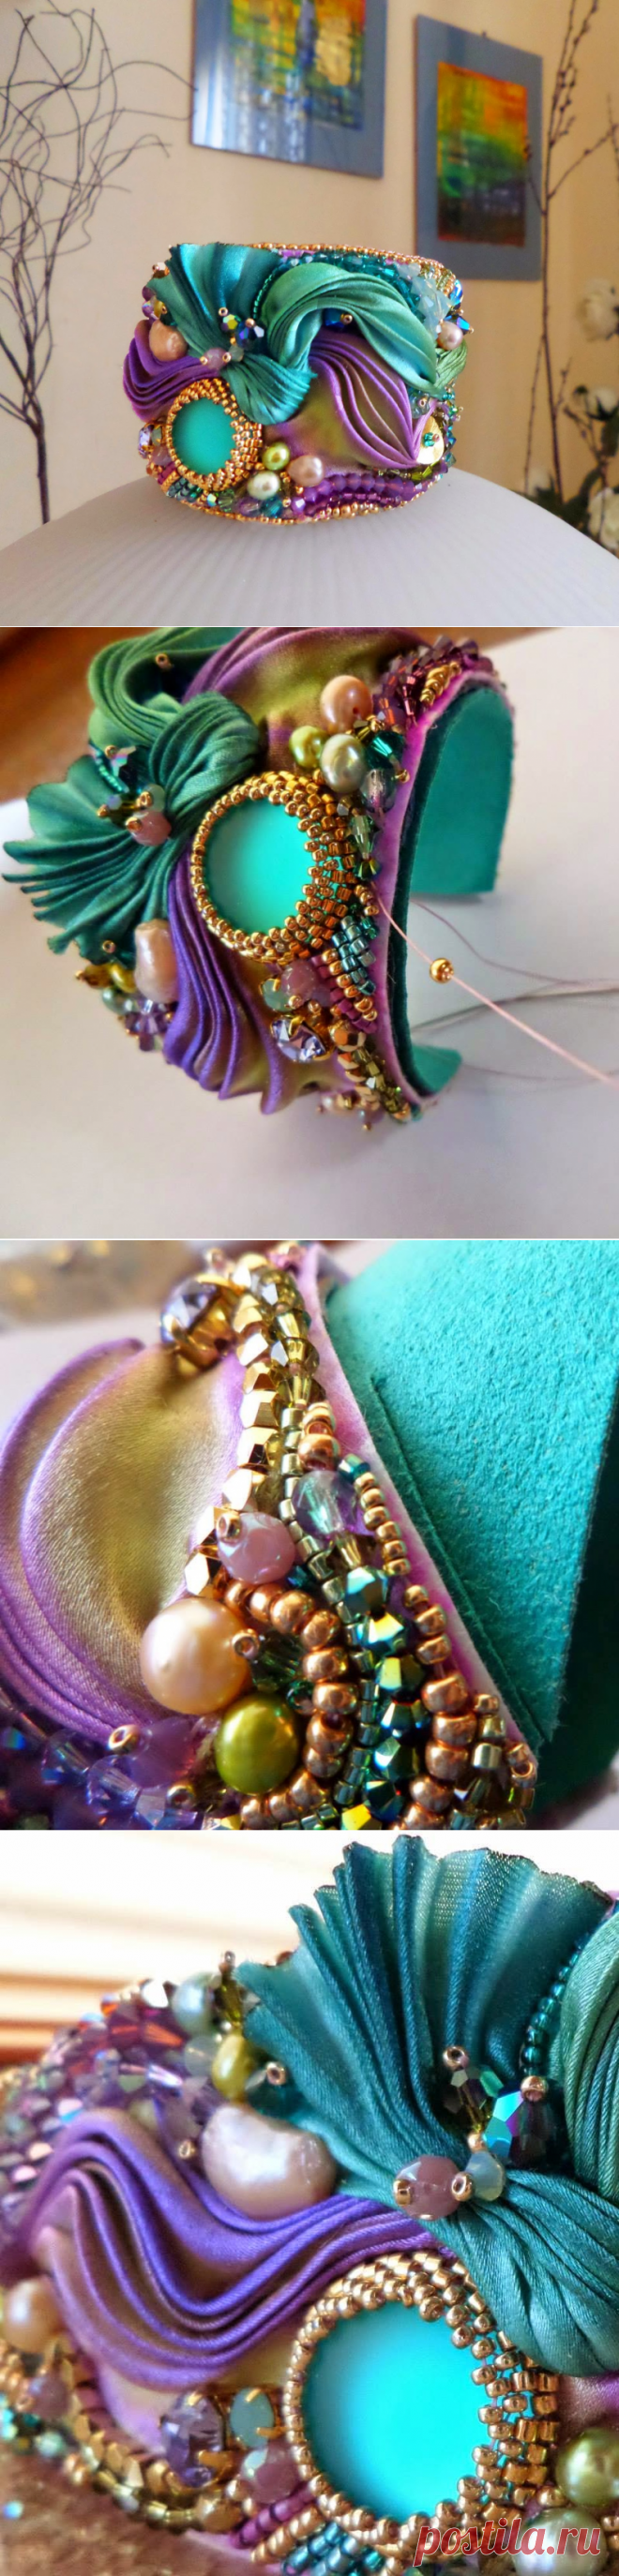 de Cor's Handmades - Malaysia Handmade Jewelry: Step By Step Shibori Cuff Tutorial by Serena Di Mercione Jewelry